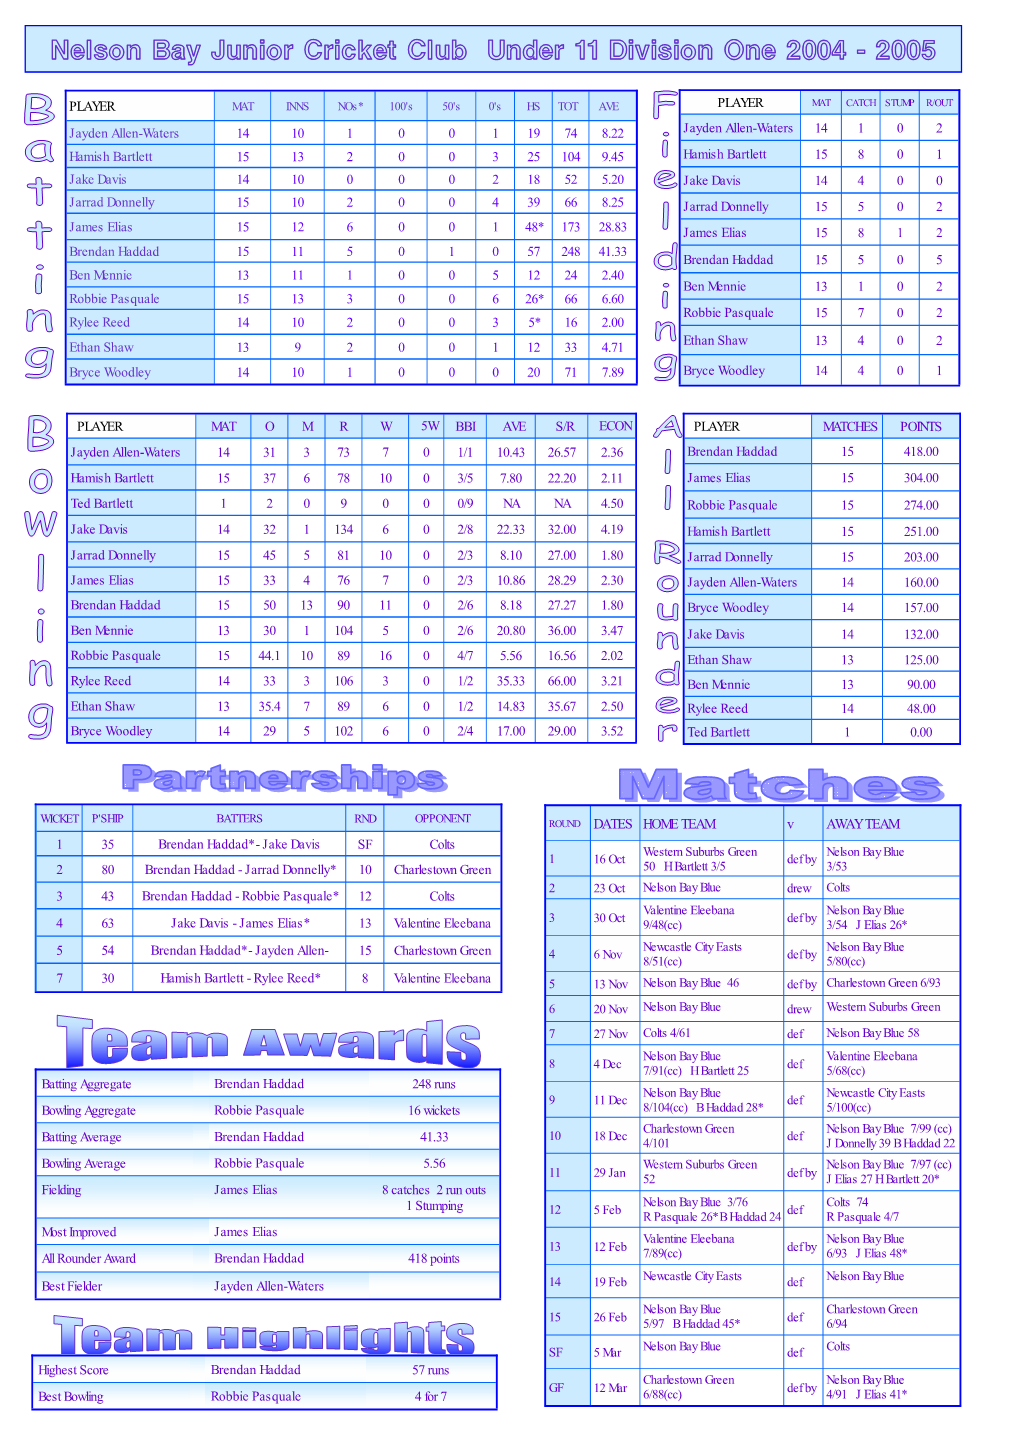 Nelson Bay Junior Cricket Club Under 11 Division One 2004 - 2005